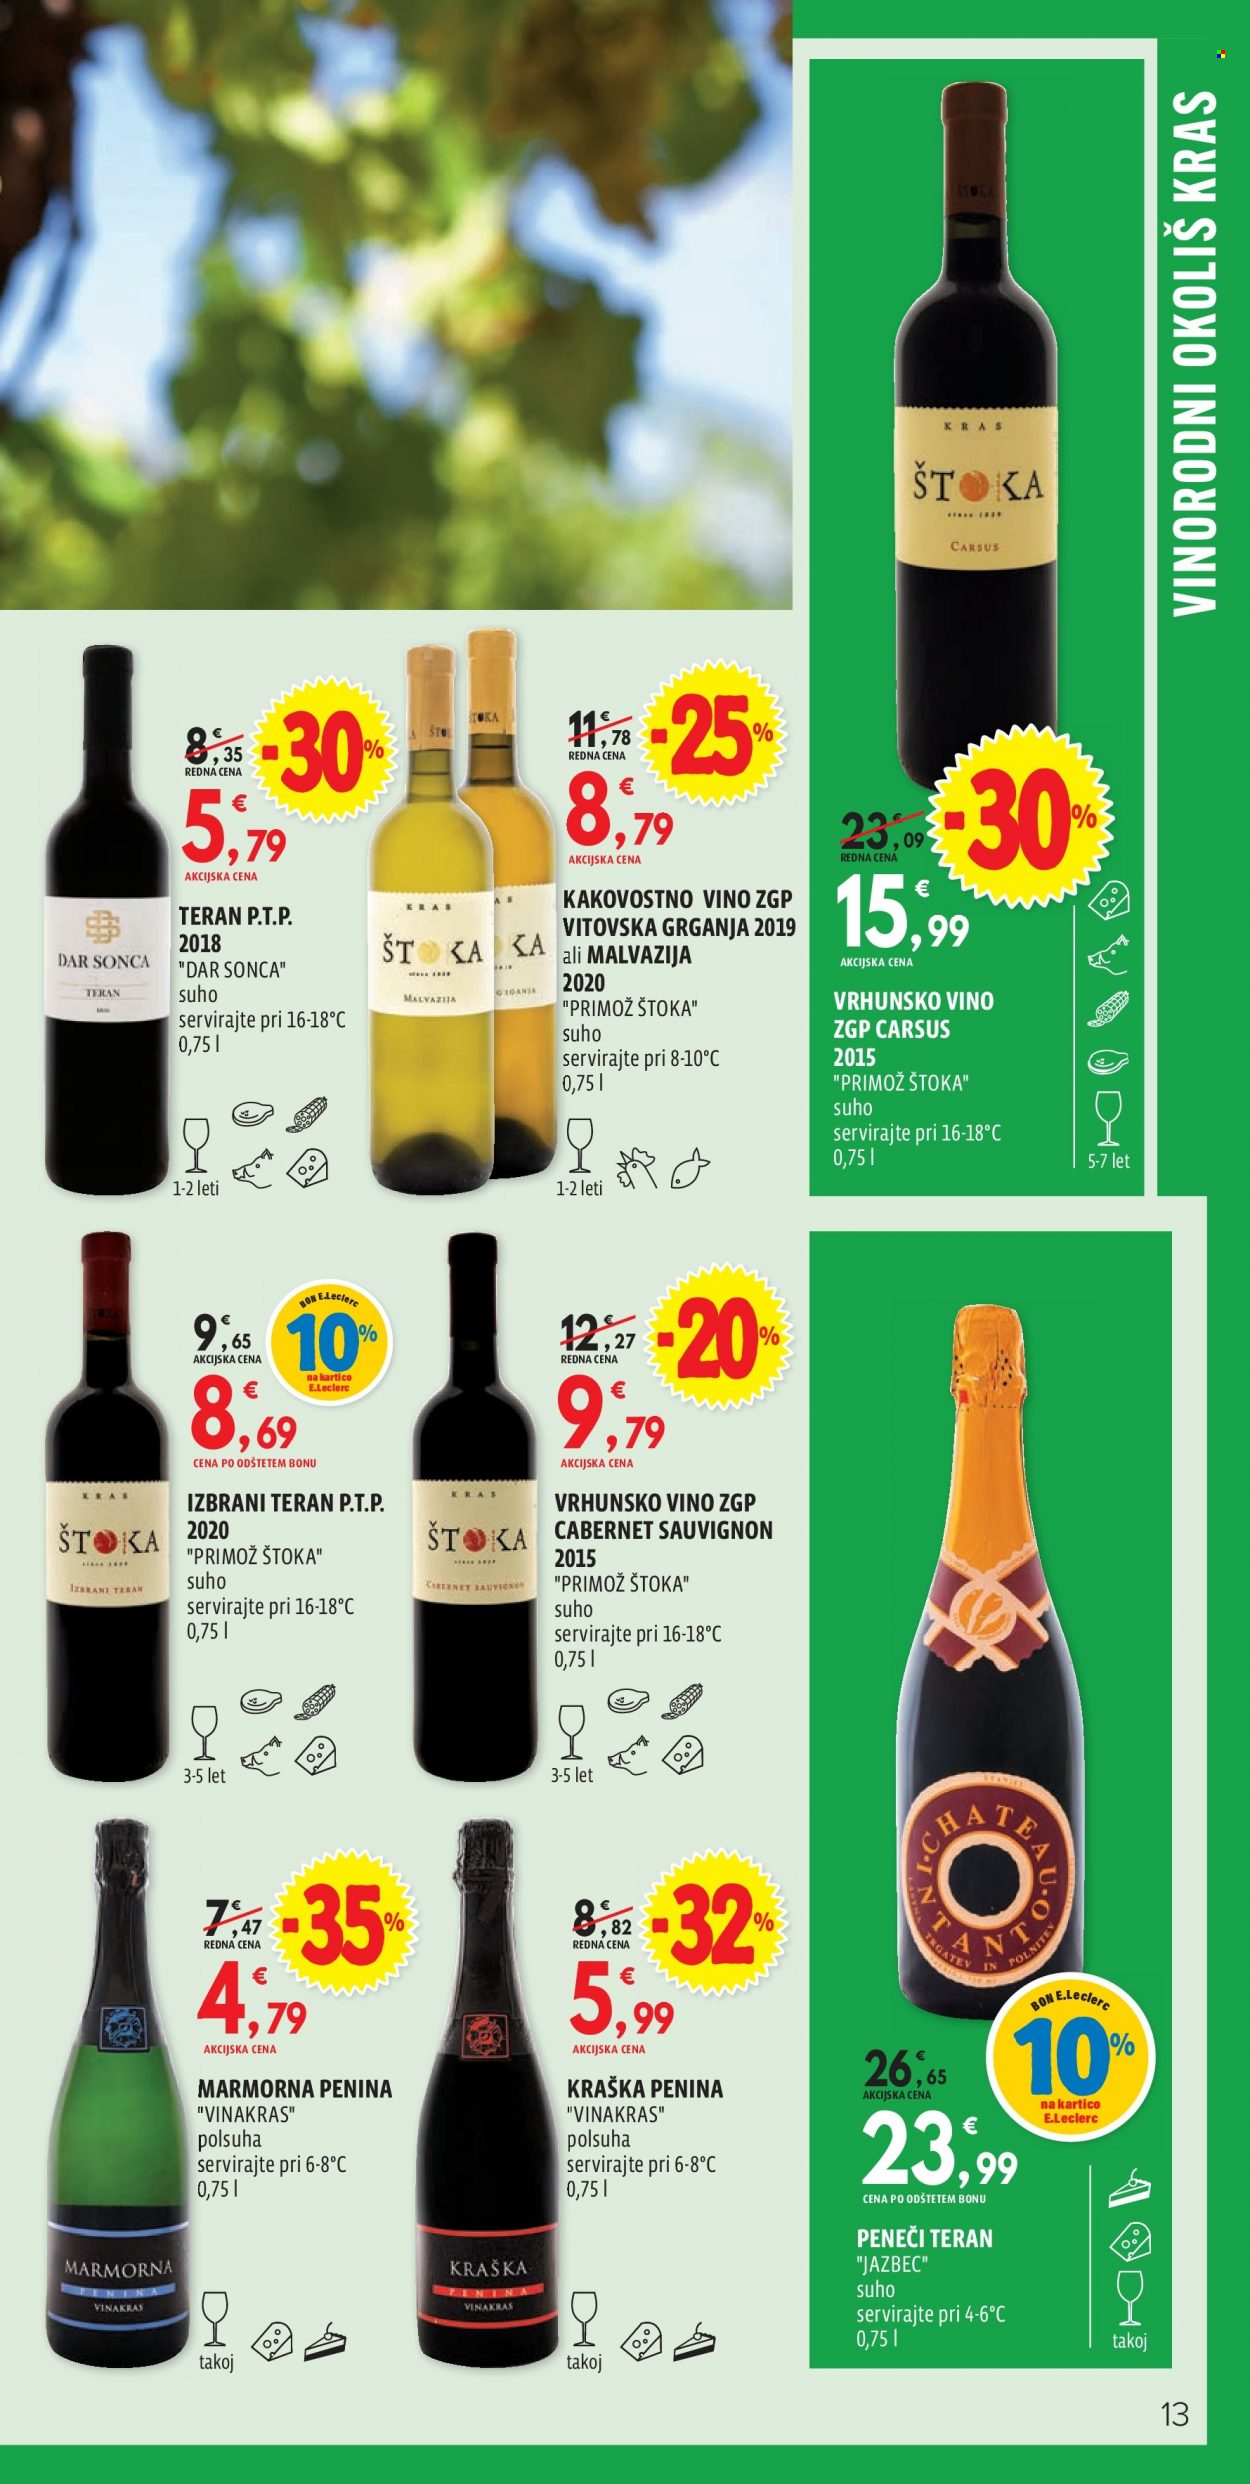 thumbnail - E.Leclerc katalog - 13.10.2021 - 30.10.2021 - Ponudba izdelkov - vino, Cabernet Sauvignon, penina. Stran 13.